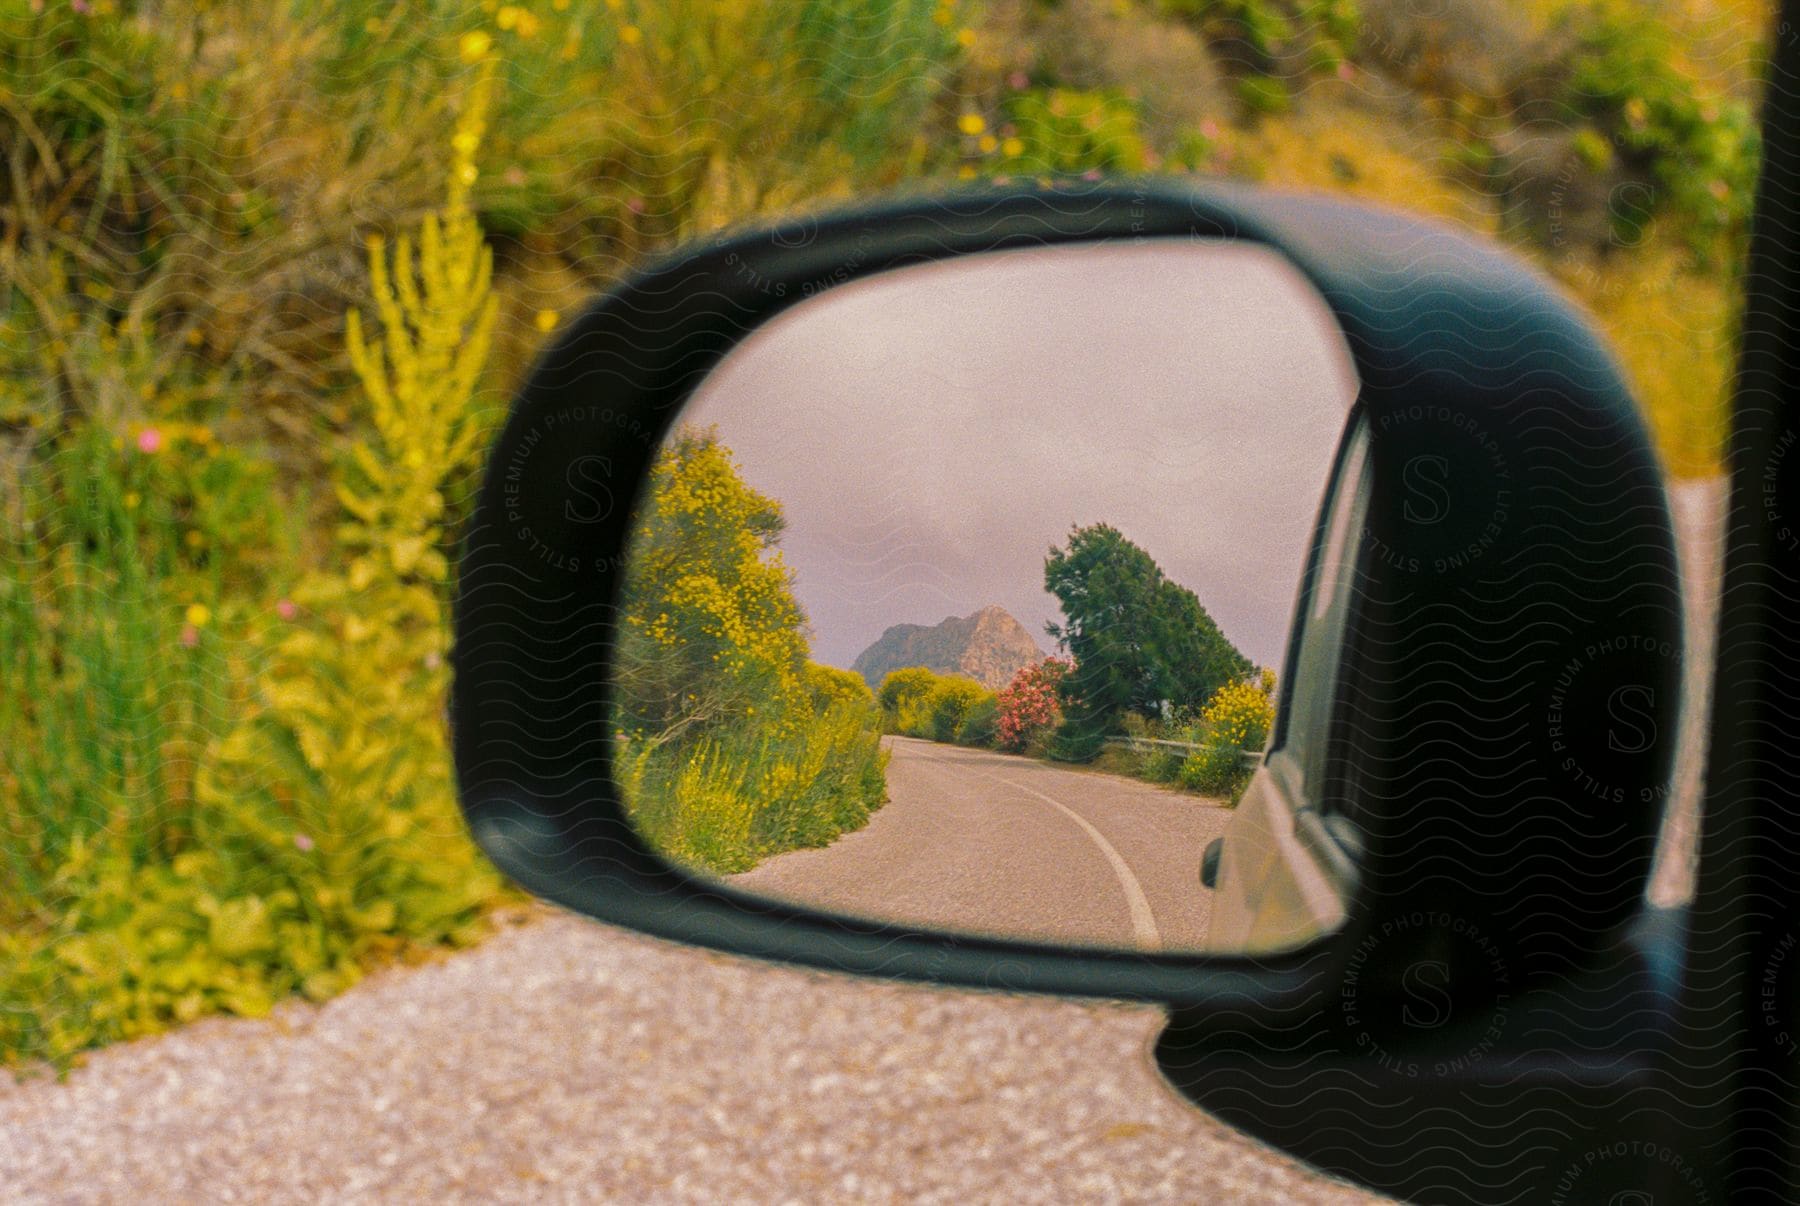 A country road seen through a car's side mirror.